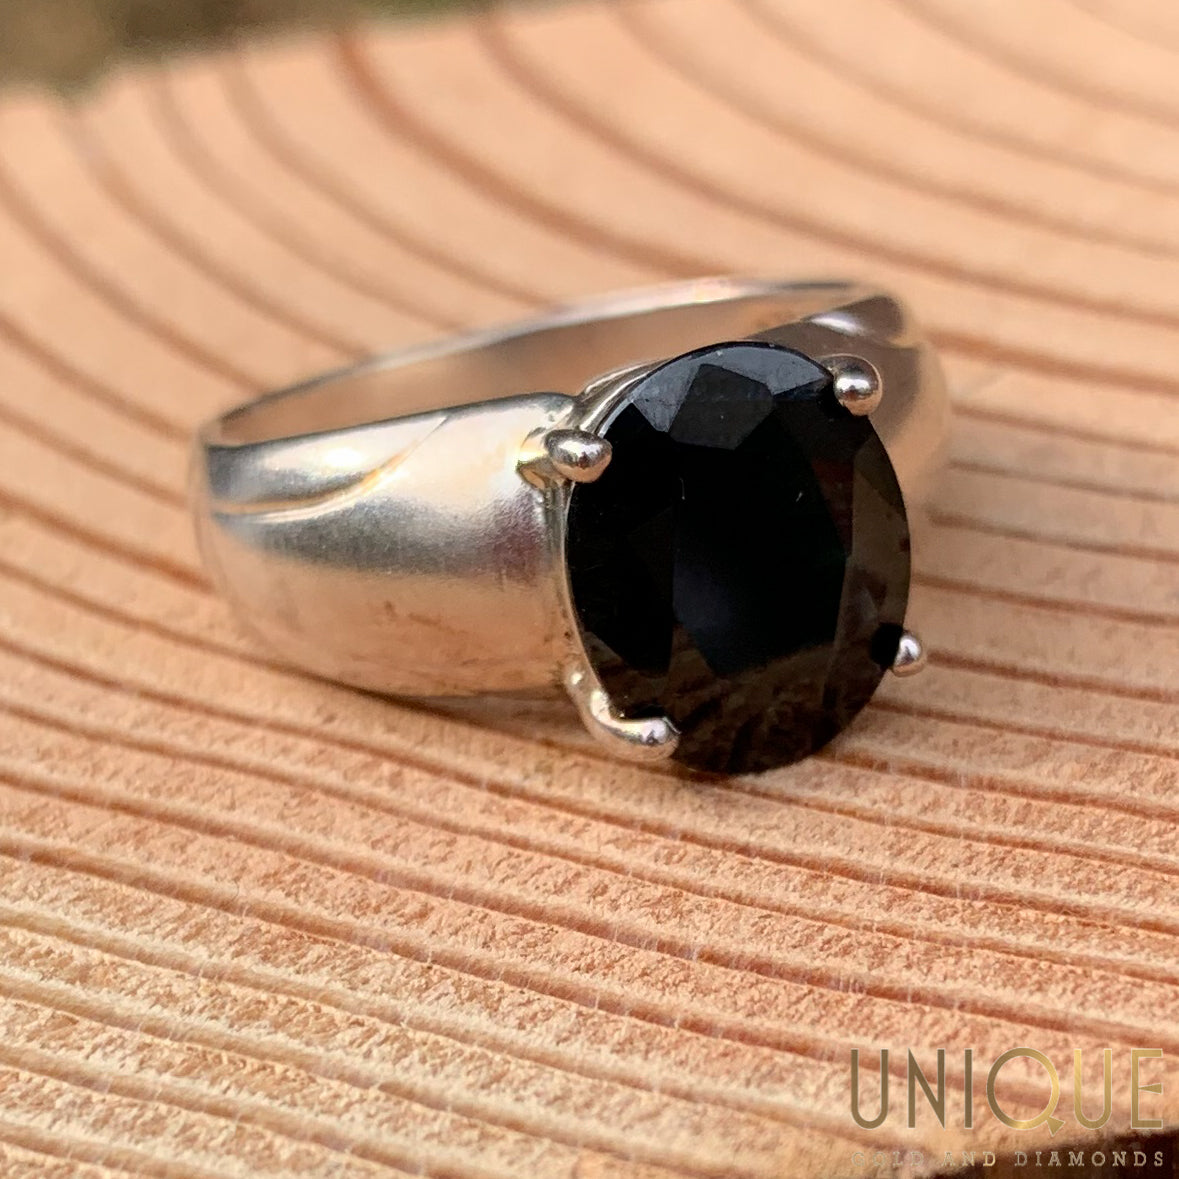 PAURO Men's Stainless Steel Vintage Gemstone Ring Engraved Flower Design  Black Plated, Black Stone Size 7|Amazon.com